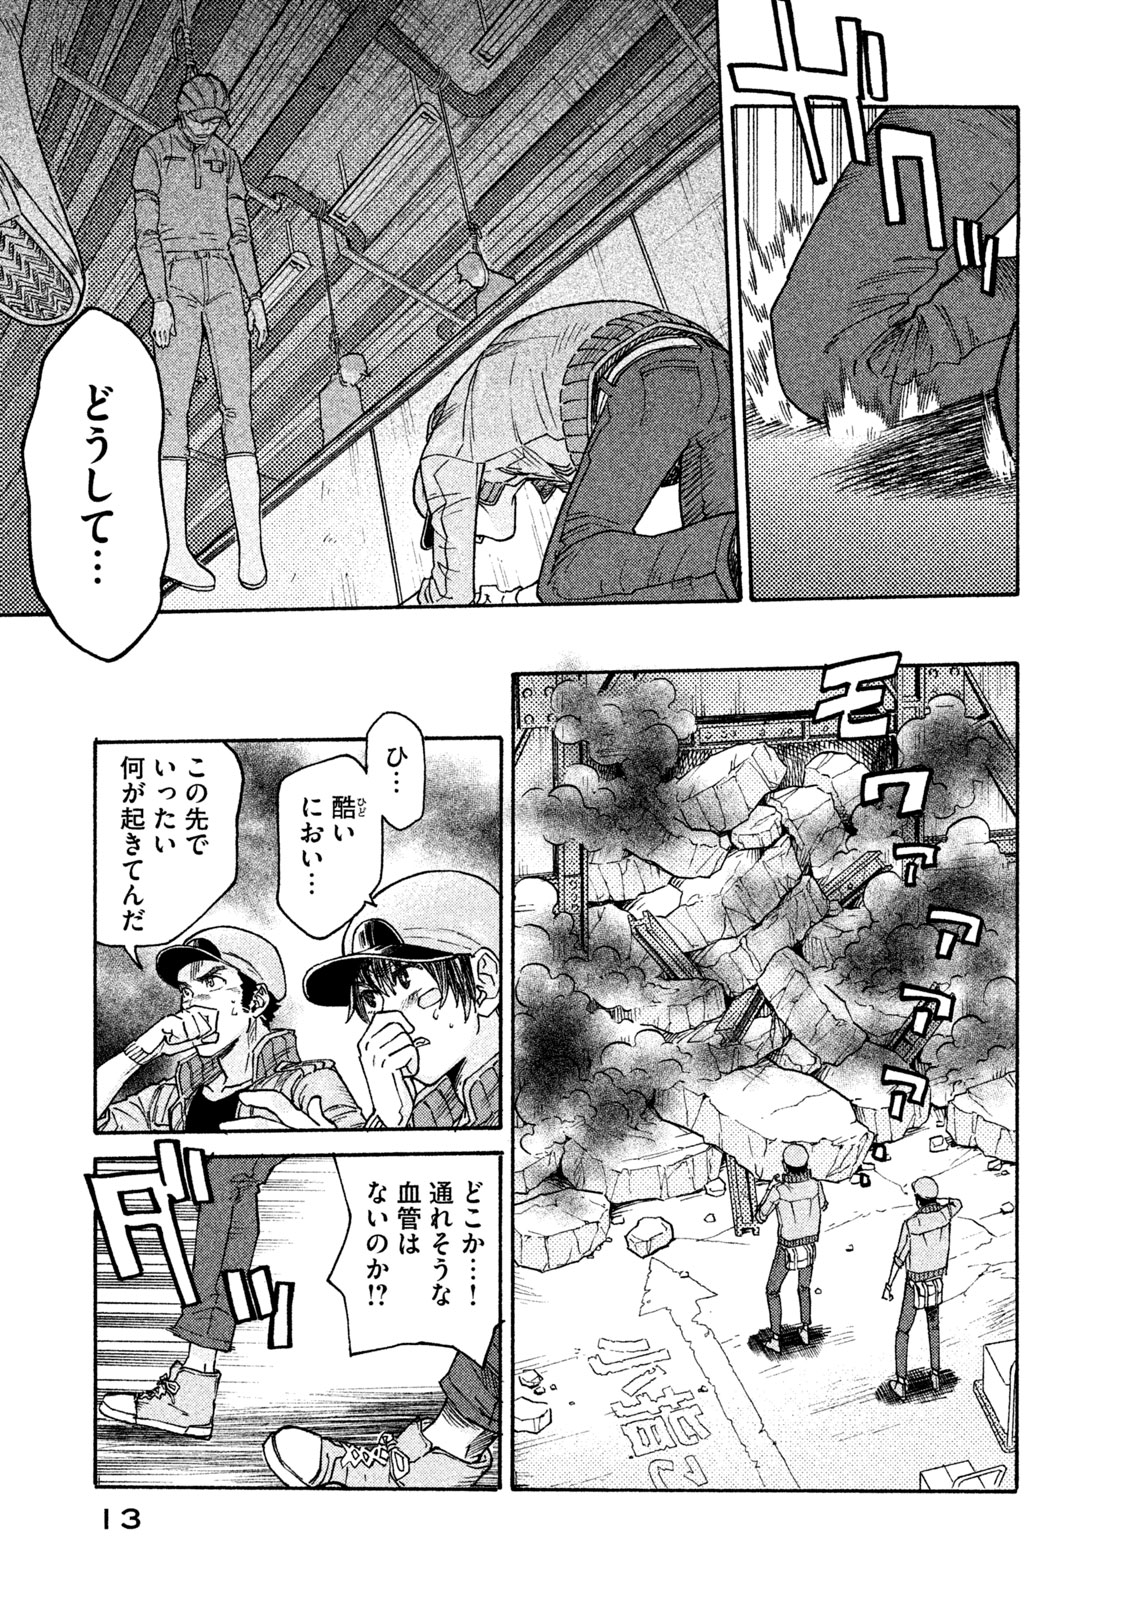 Hataraku Saibou BLACK - Chapter 25 - Page 15